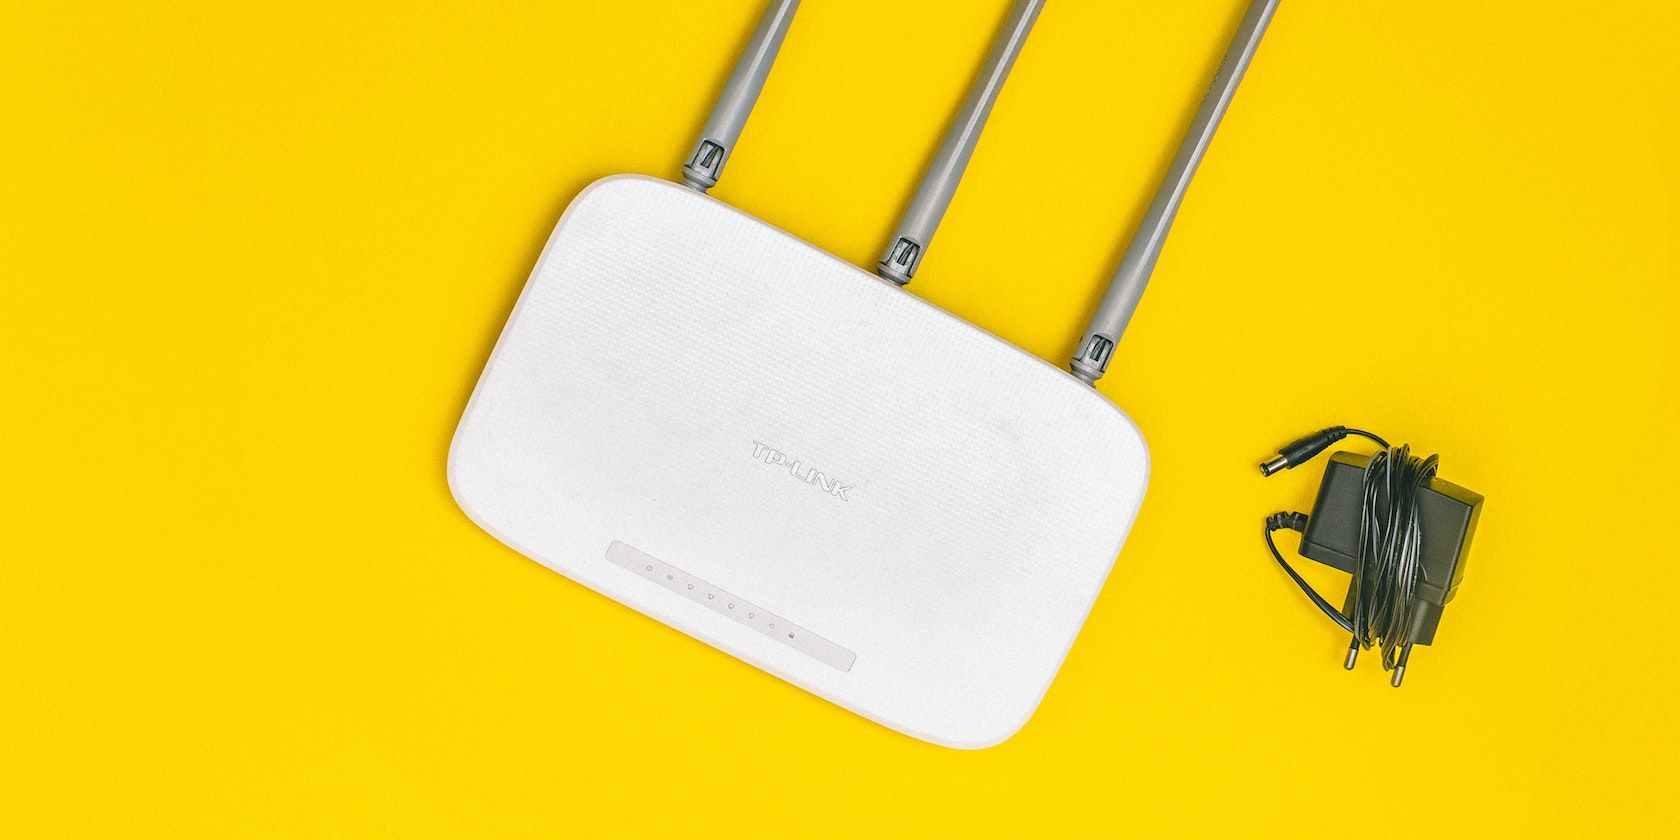 Router Wi-Fi dan charger pada backgrounhd kuning